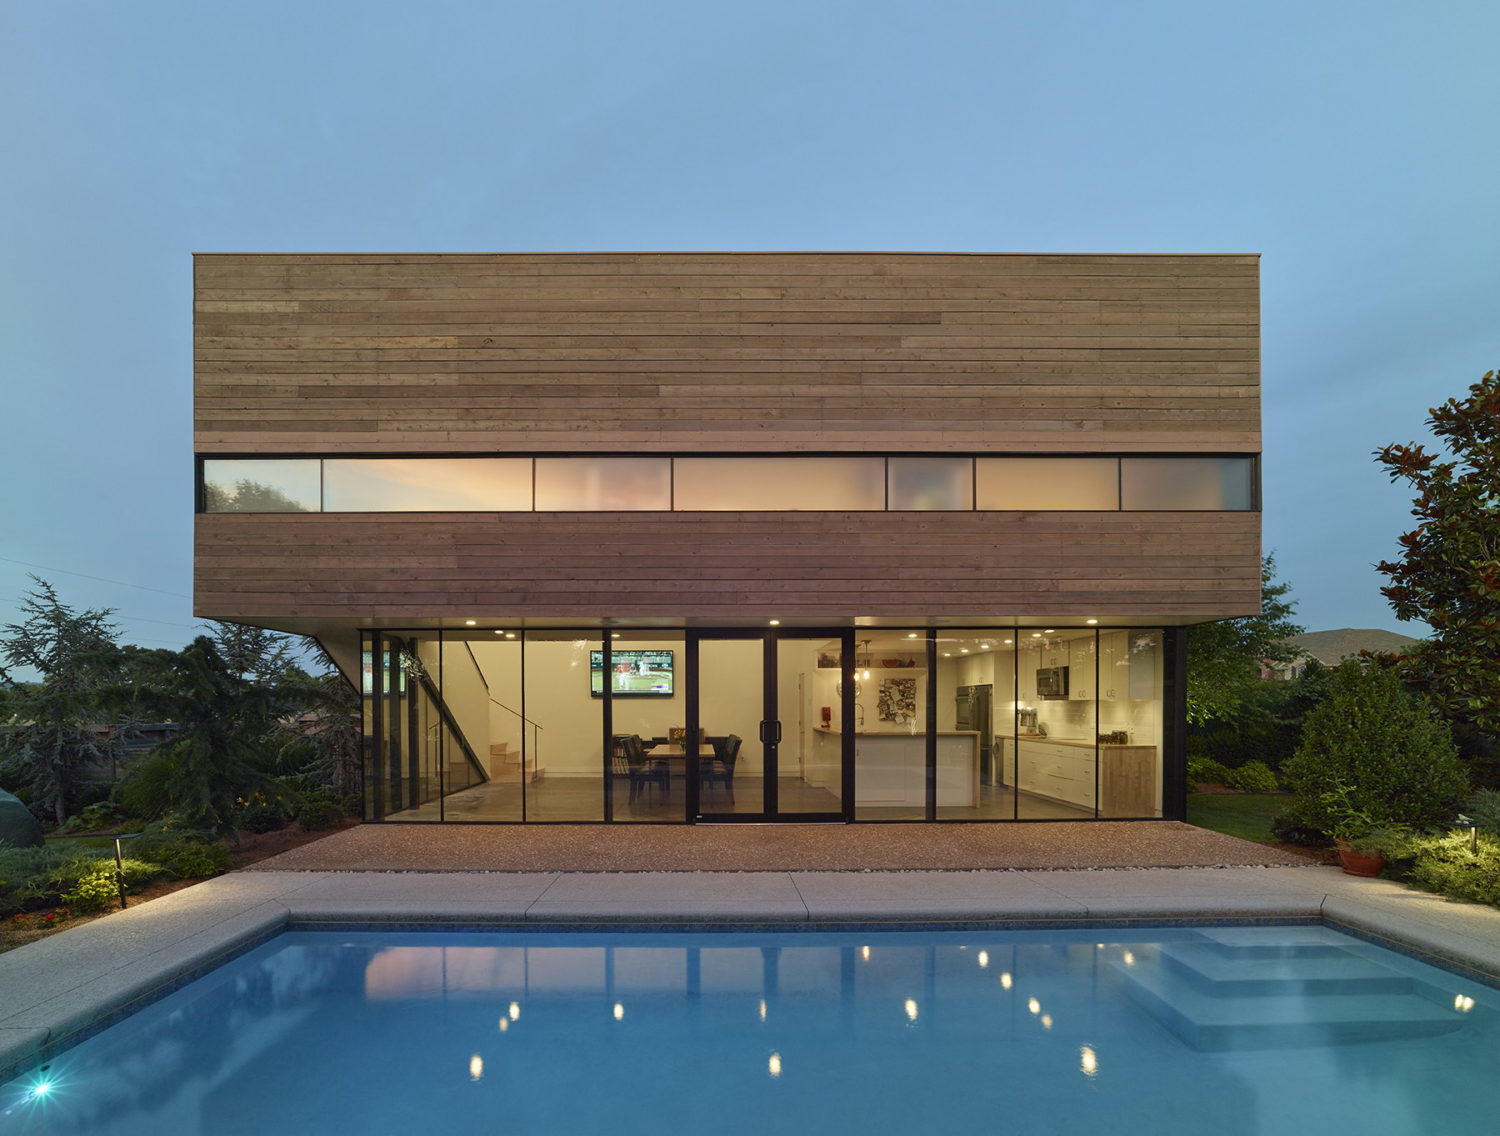 Srygley Pool House by Marlon Blackwell Architects